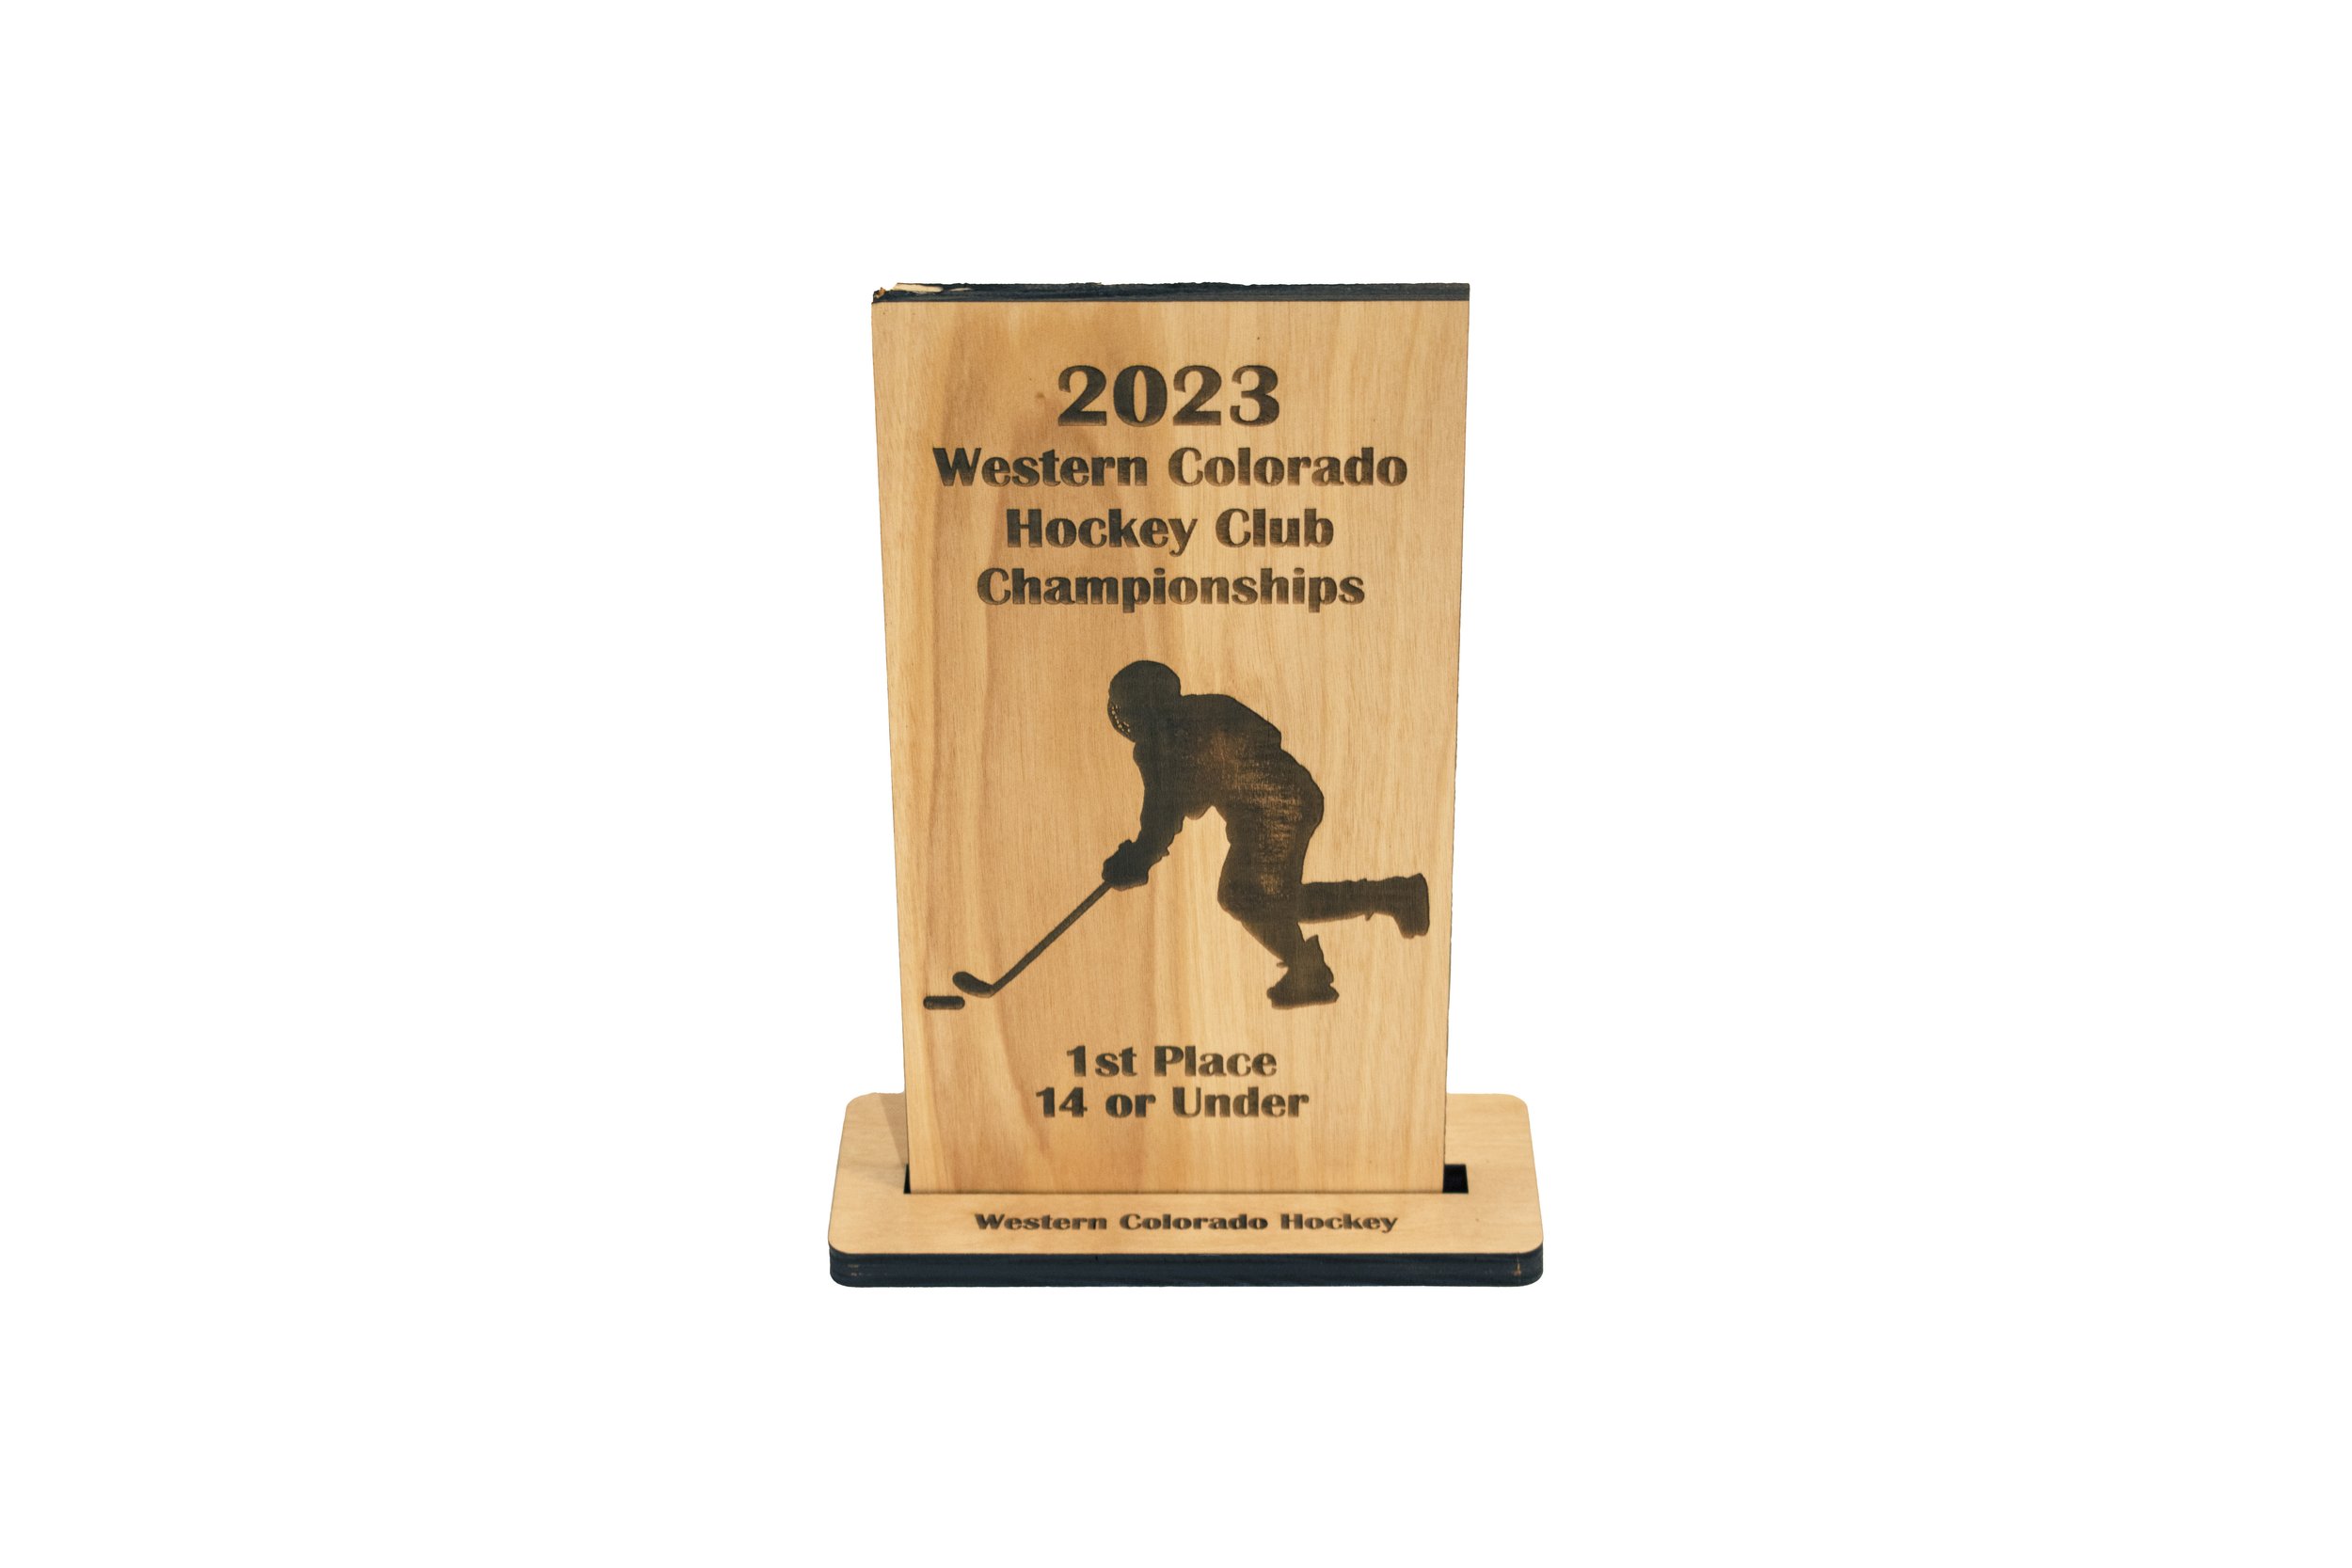 Hockey Trophies